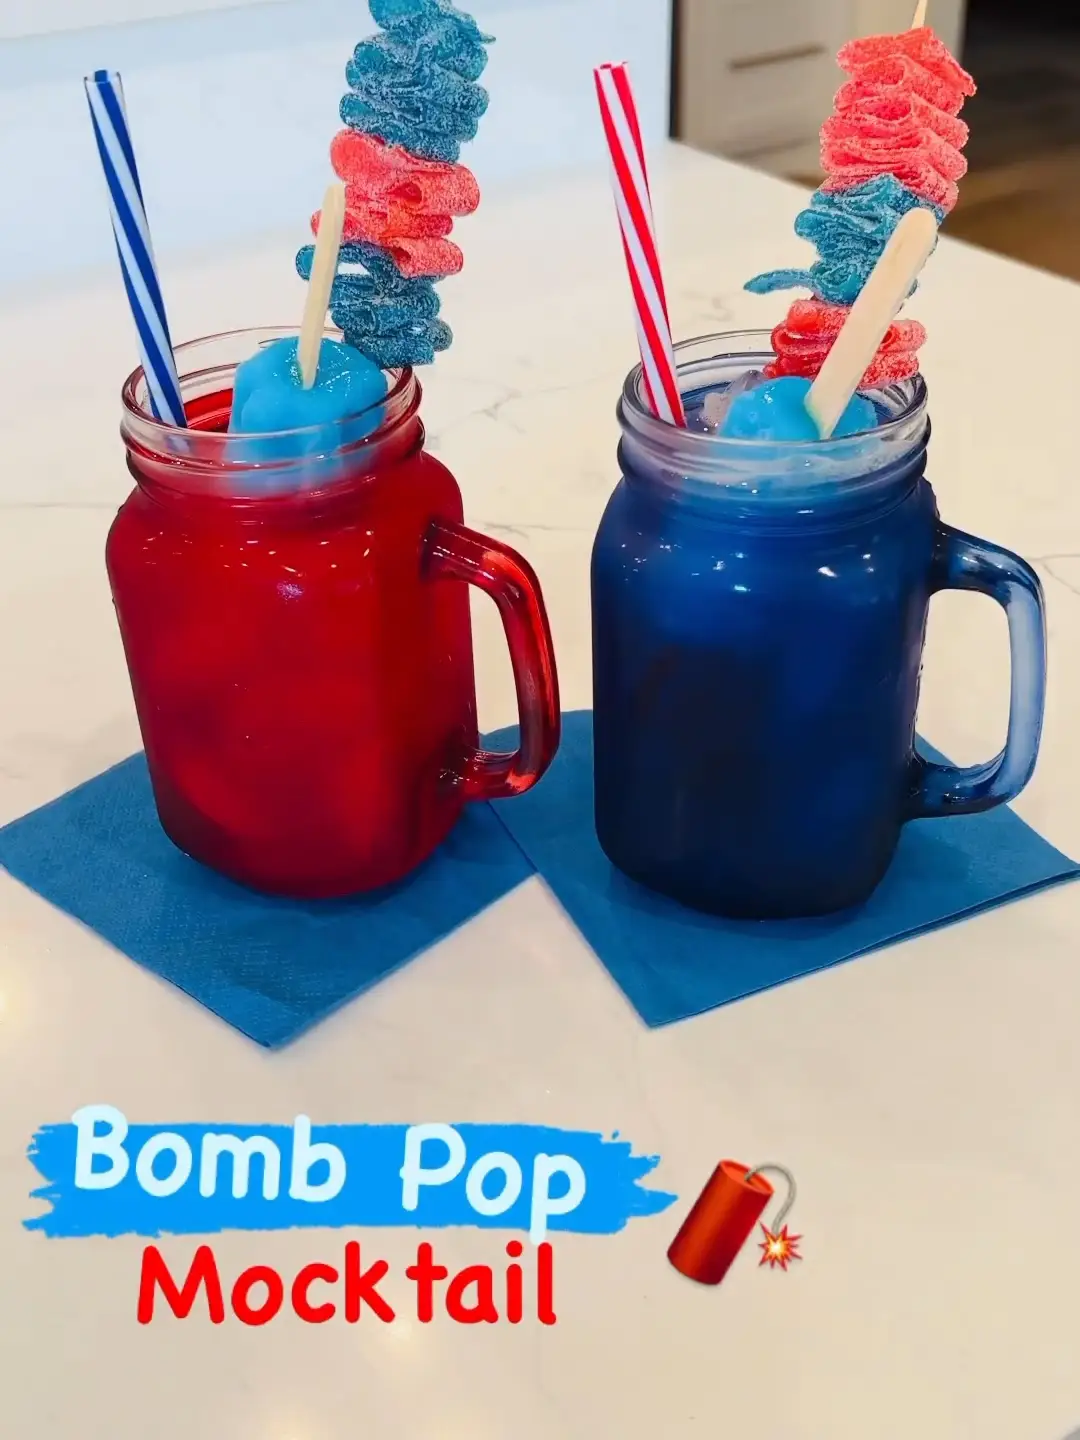 Bomb Pop Mocktail 🇺🇸❤️💙's images